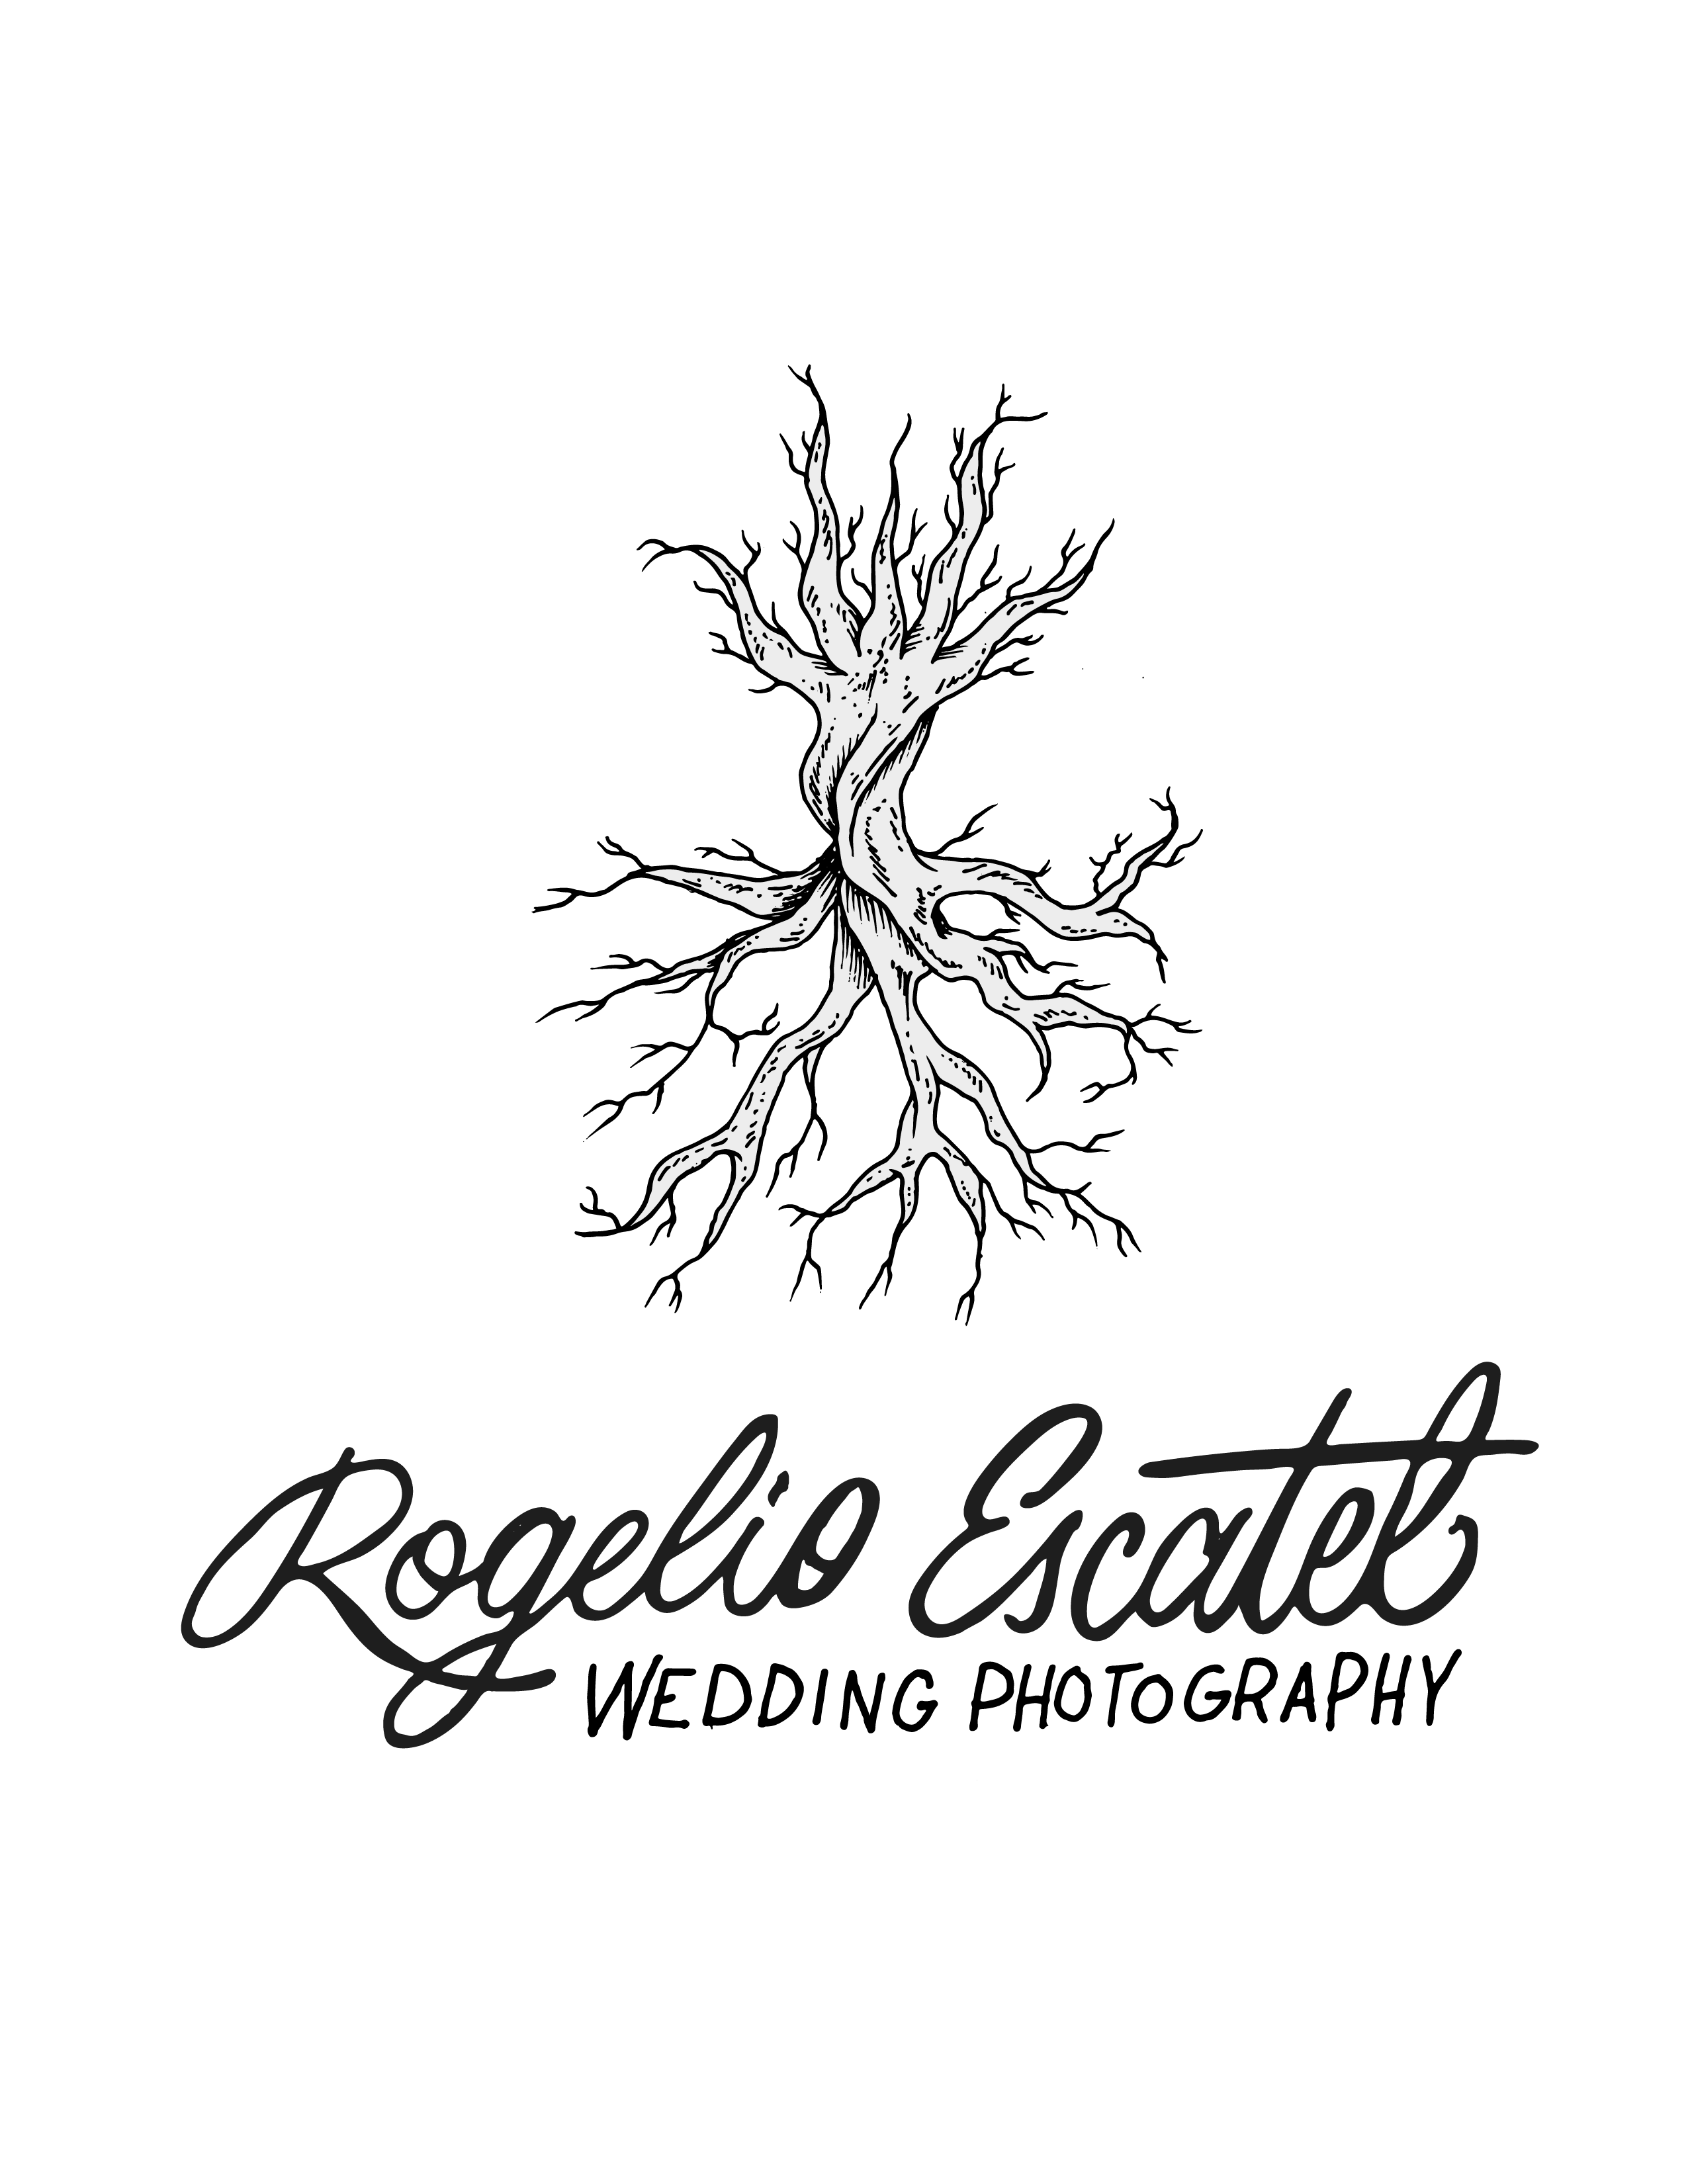 Rogelio Escatel